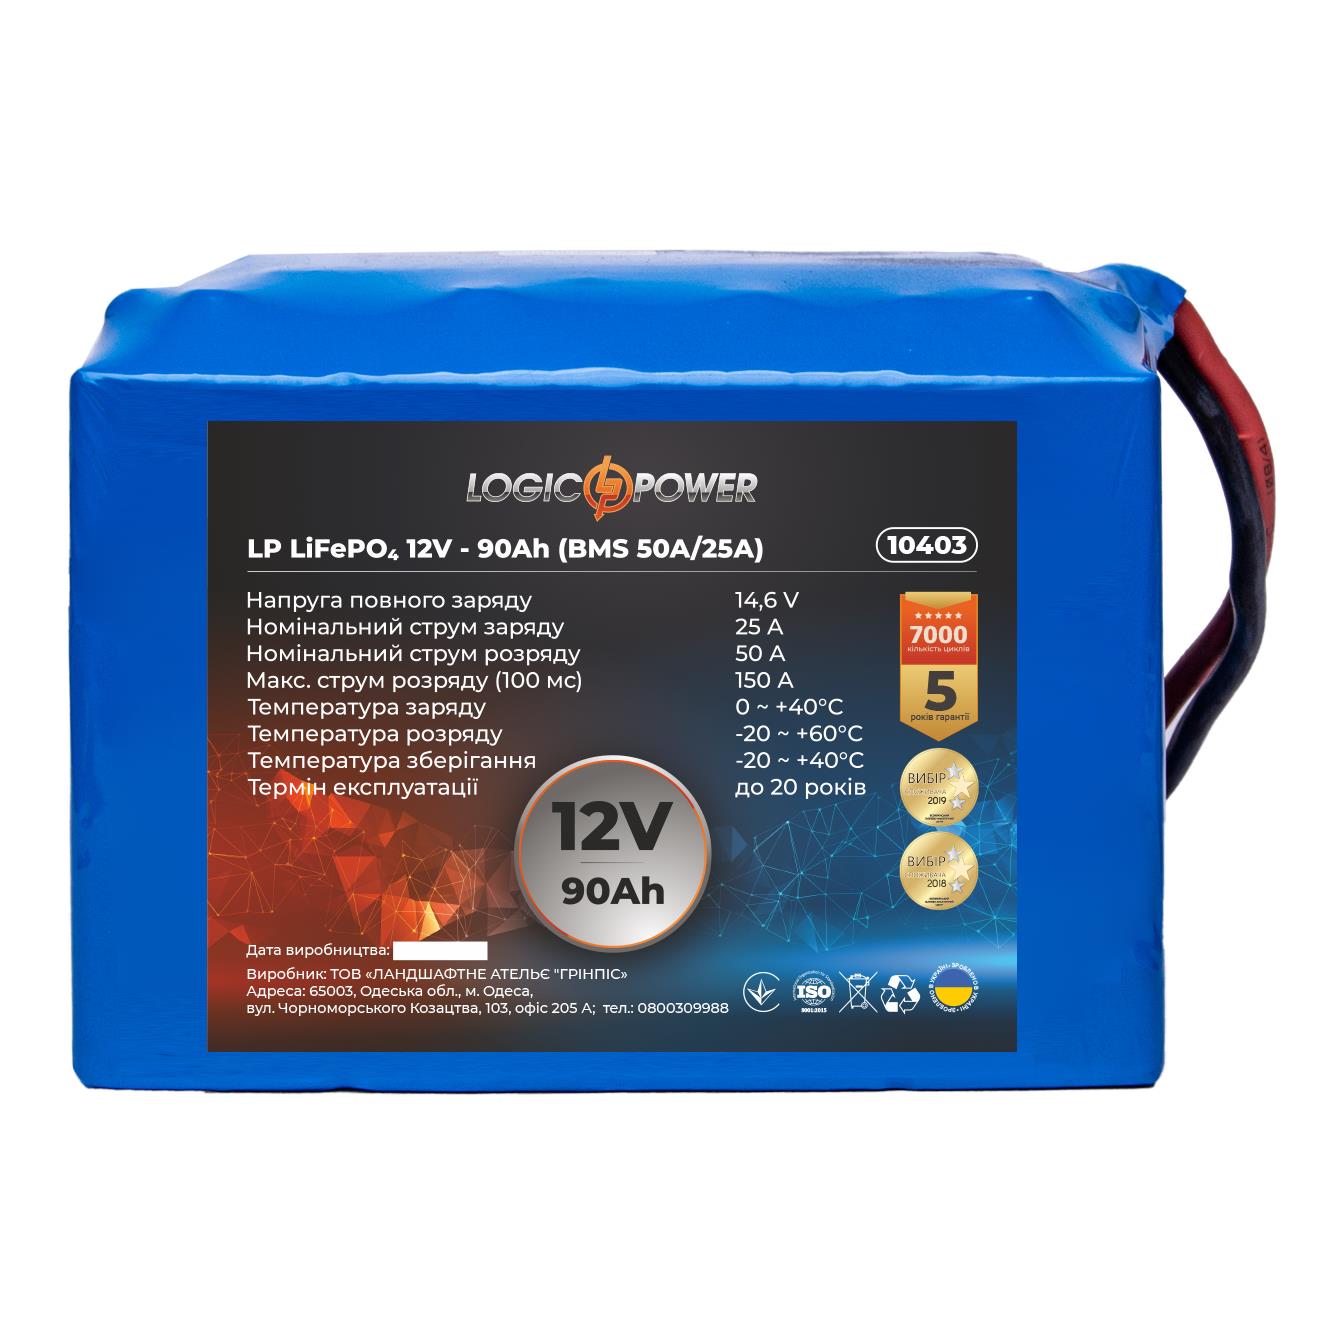 LogicPower LP LiFePO4 12V - 90 Ah (BMS 50A/25A) (10403)